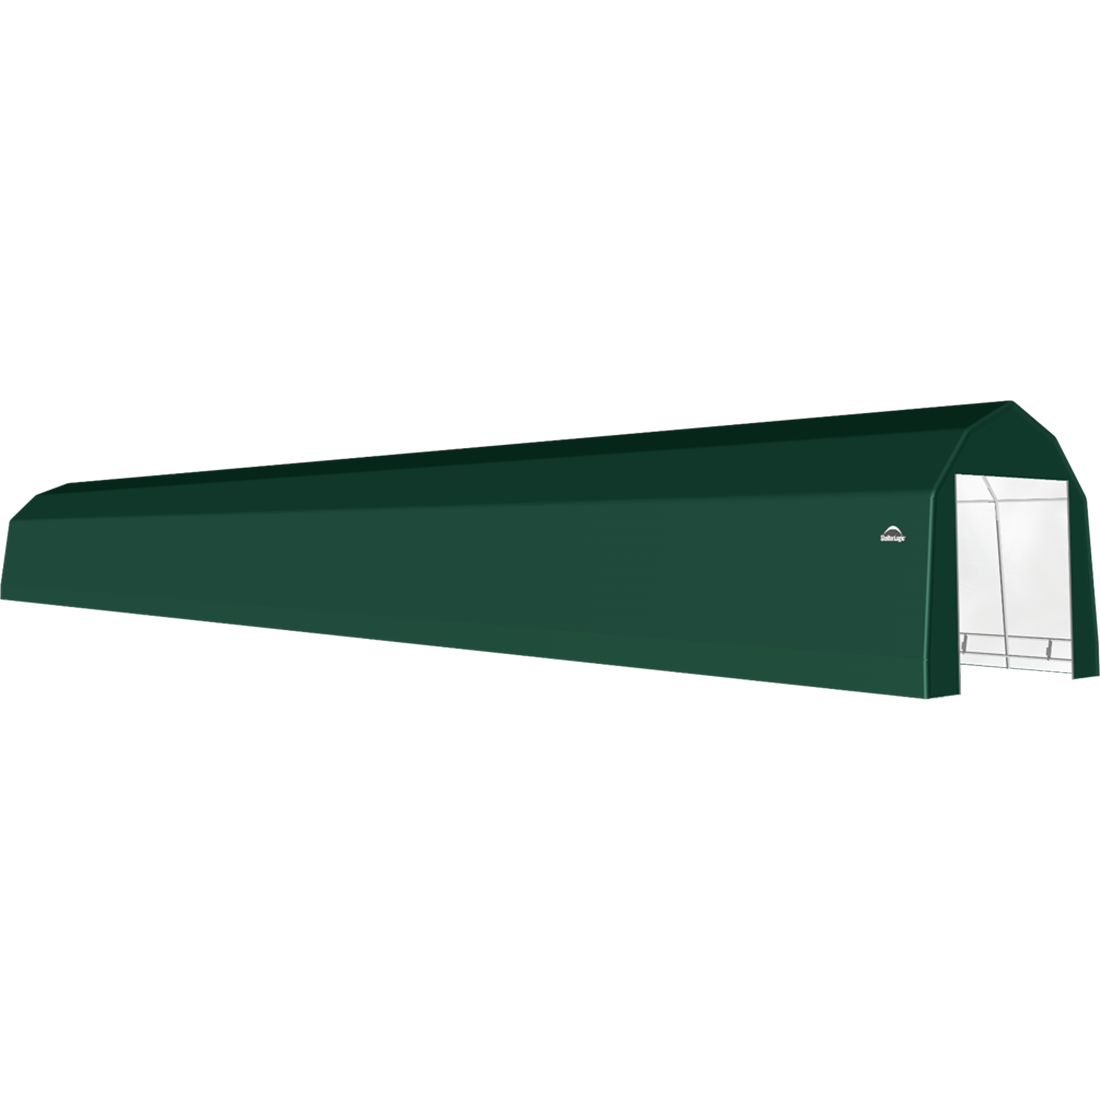 ShelterTech SP Series Barn Shelter, 12 ft. x 92 ft. x 11 ft. Heavy Duty PVC 14.5 oz. Green